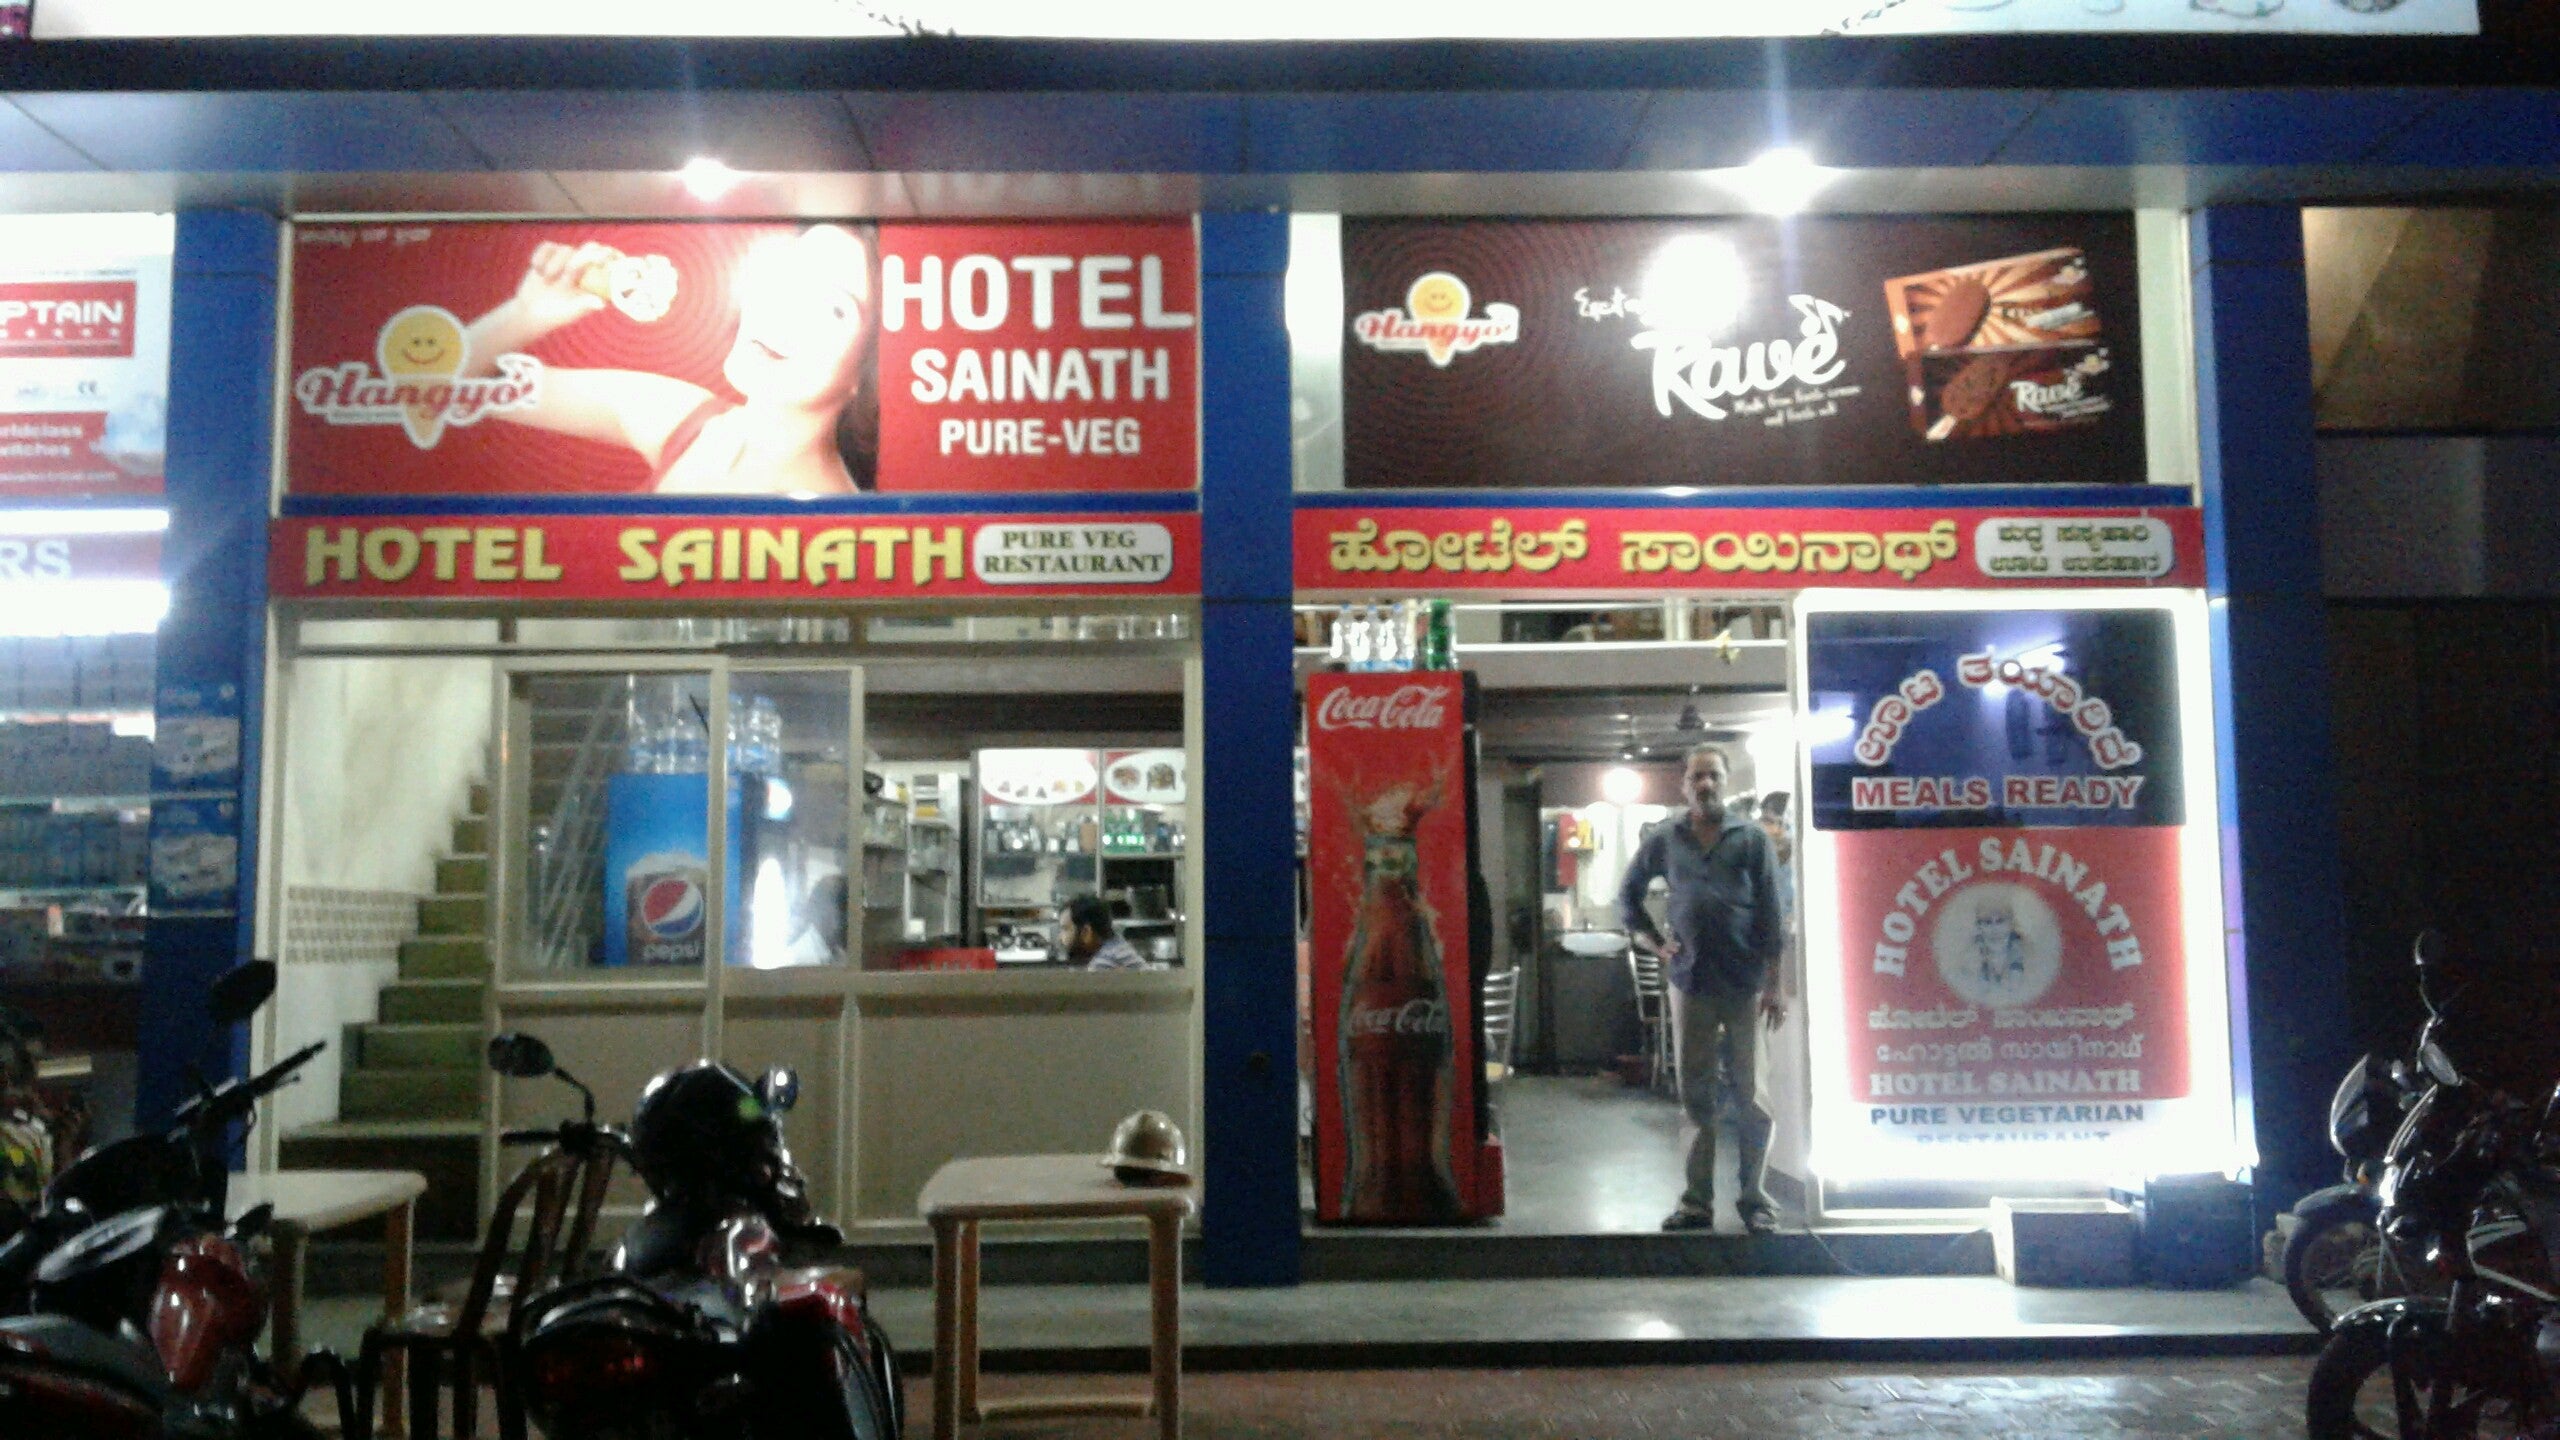 Hotel Sainath